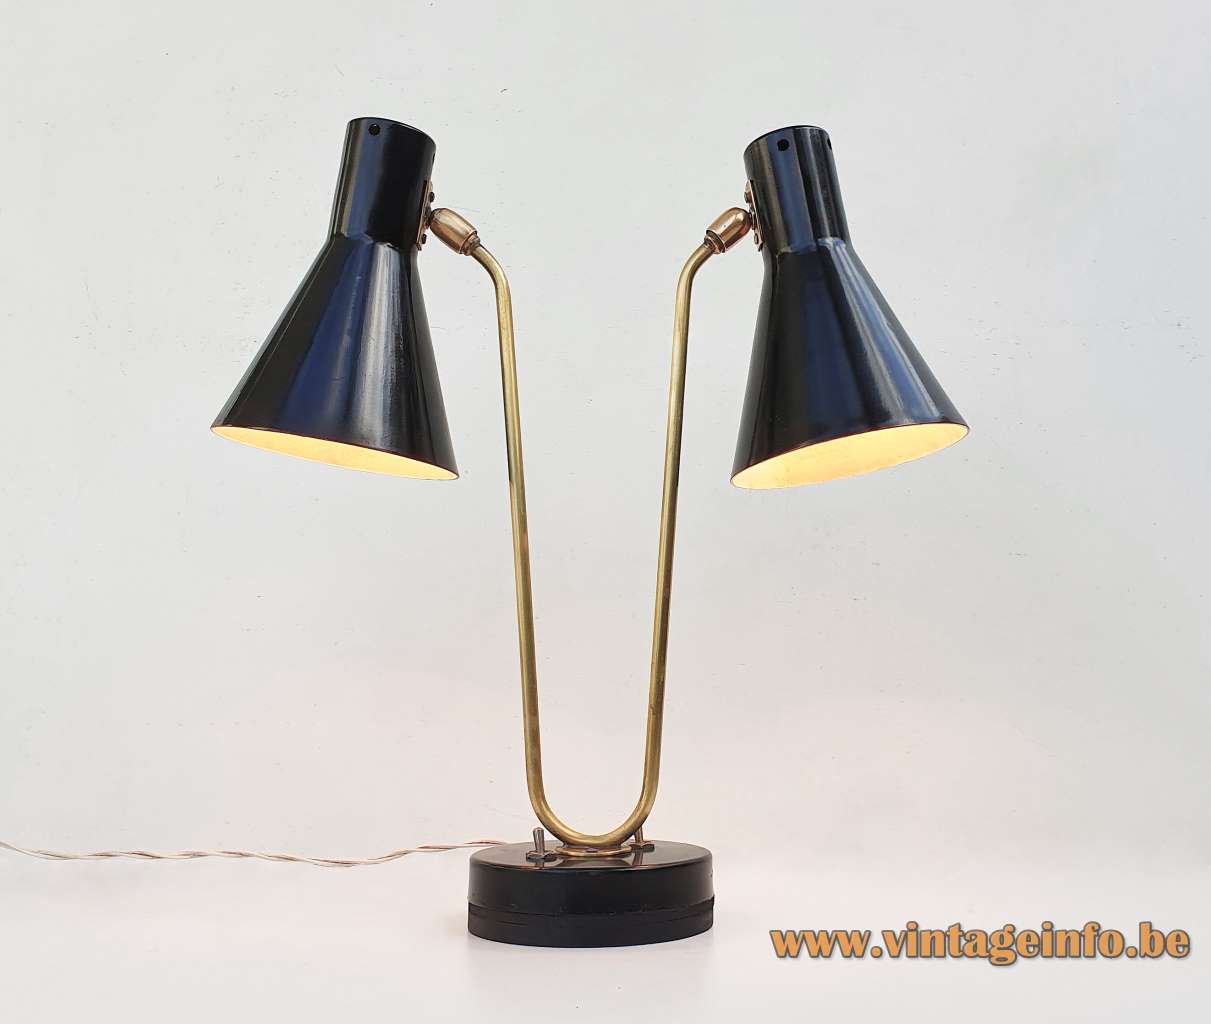 Gerald Thurston double desk lamp Lightolier 2 black lampshades & base curved folded brass rod 1950s 1960s